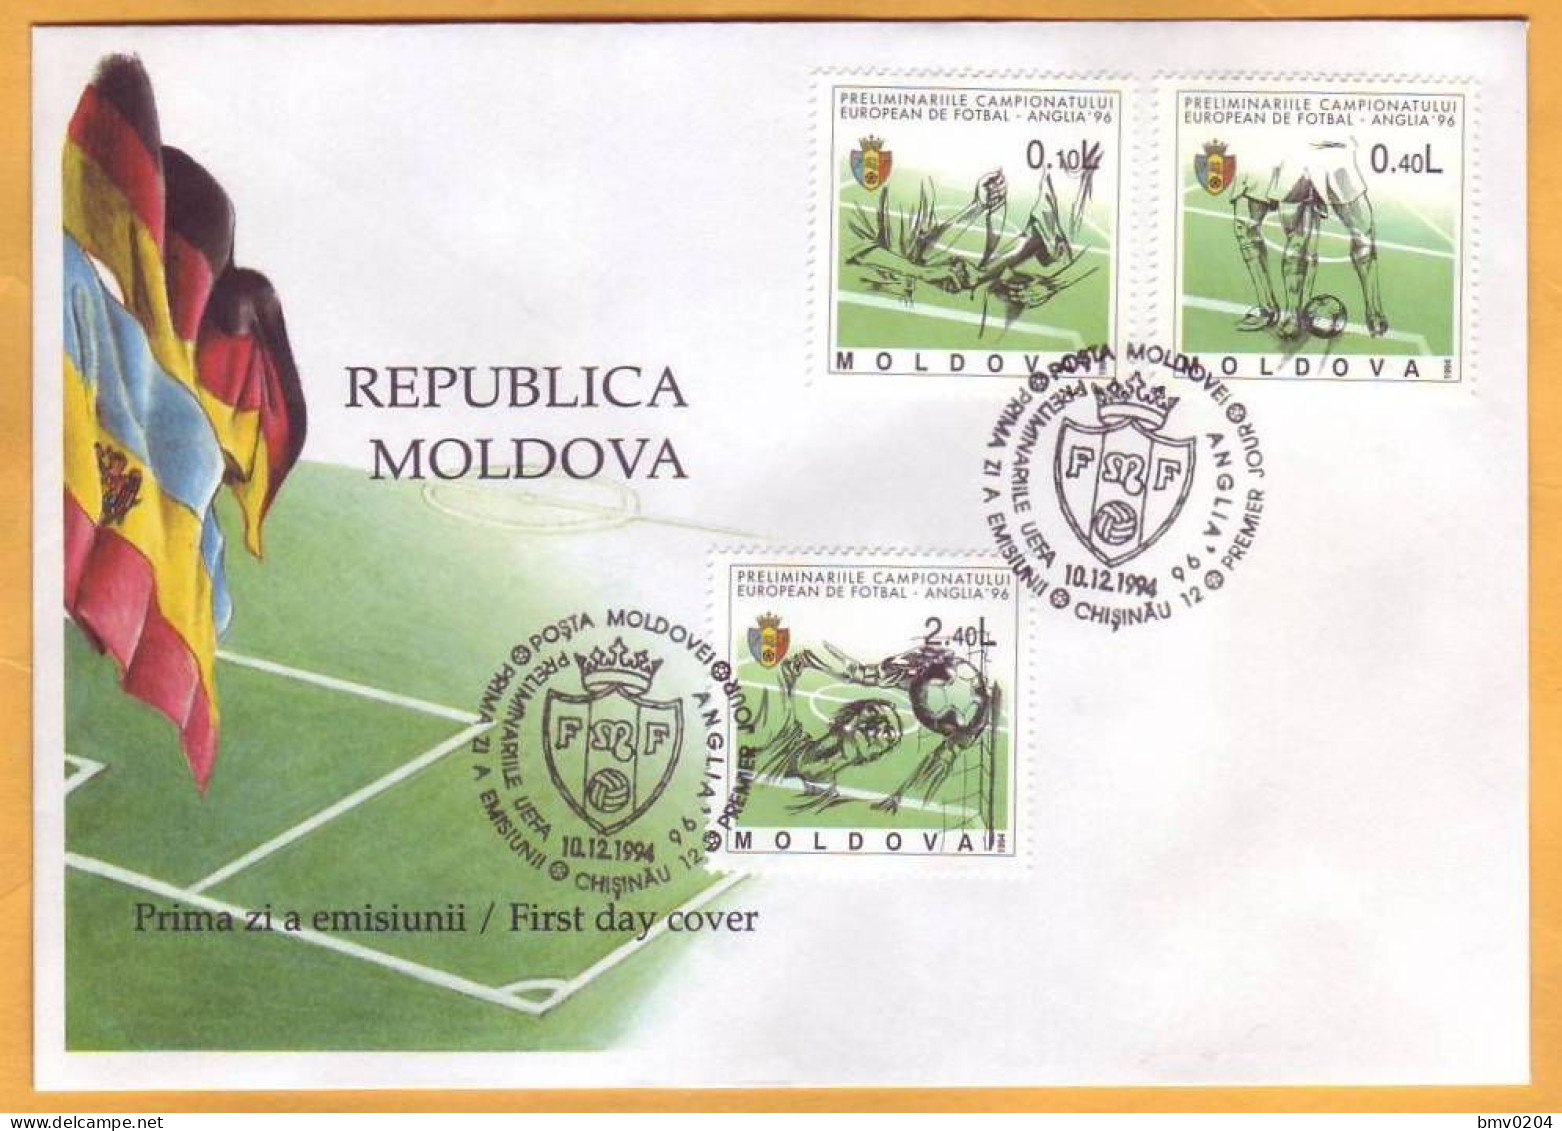 1994 1996 Moldova Moldavie FDC ERROR  European Championship. Football. London 96. Qualifying Games. - UEFA European Championship